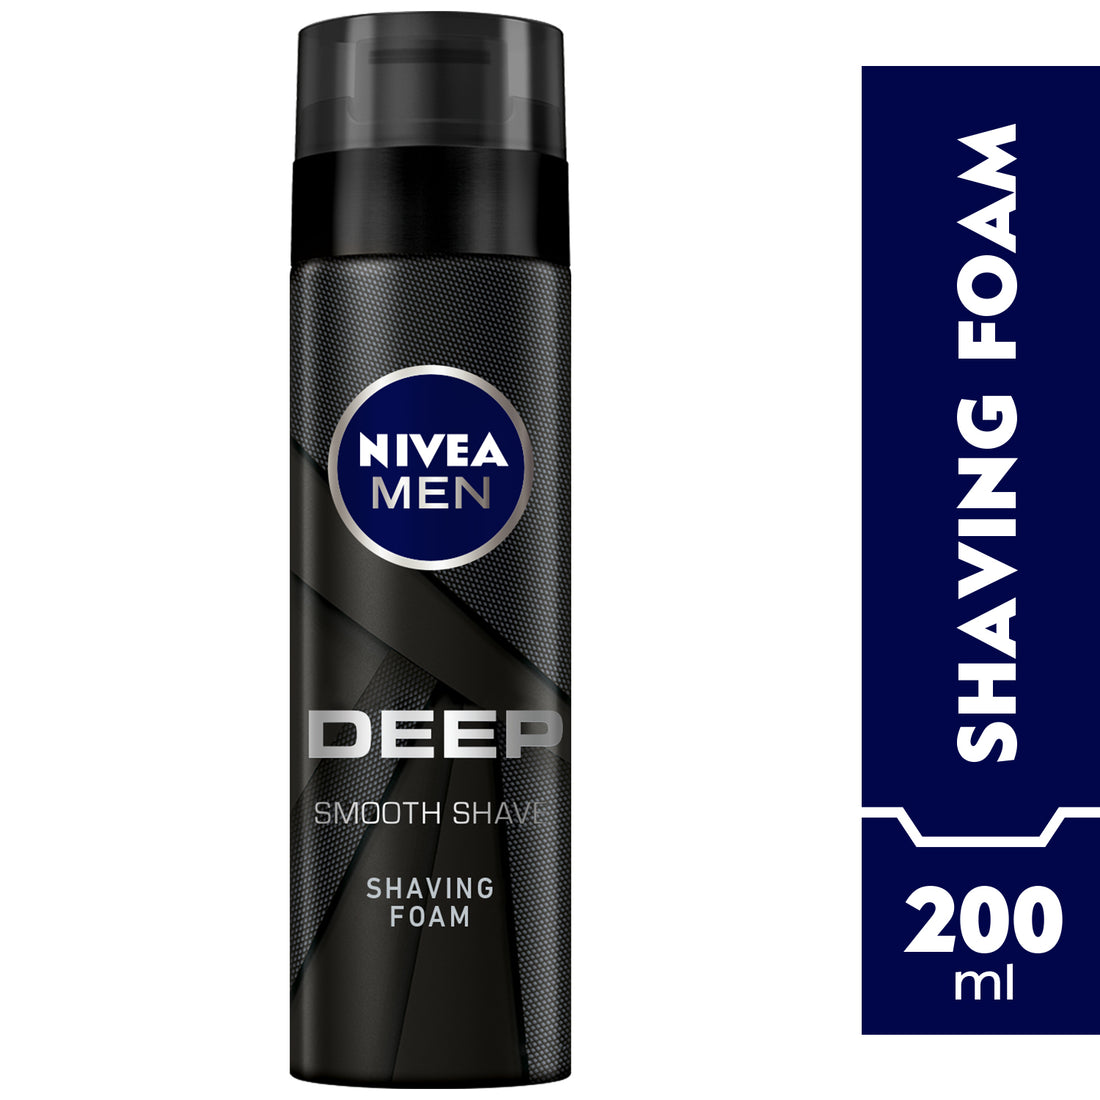 Nivea Men Deep Smooth Shave Shaving Foam, Antibacterial Black Carbon, 200ml